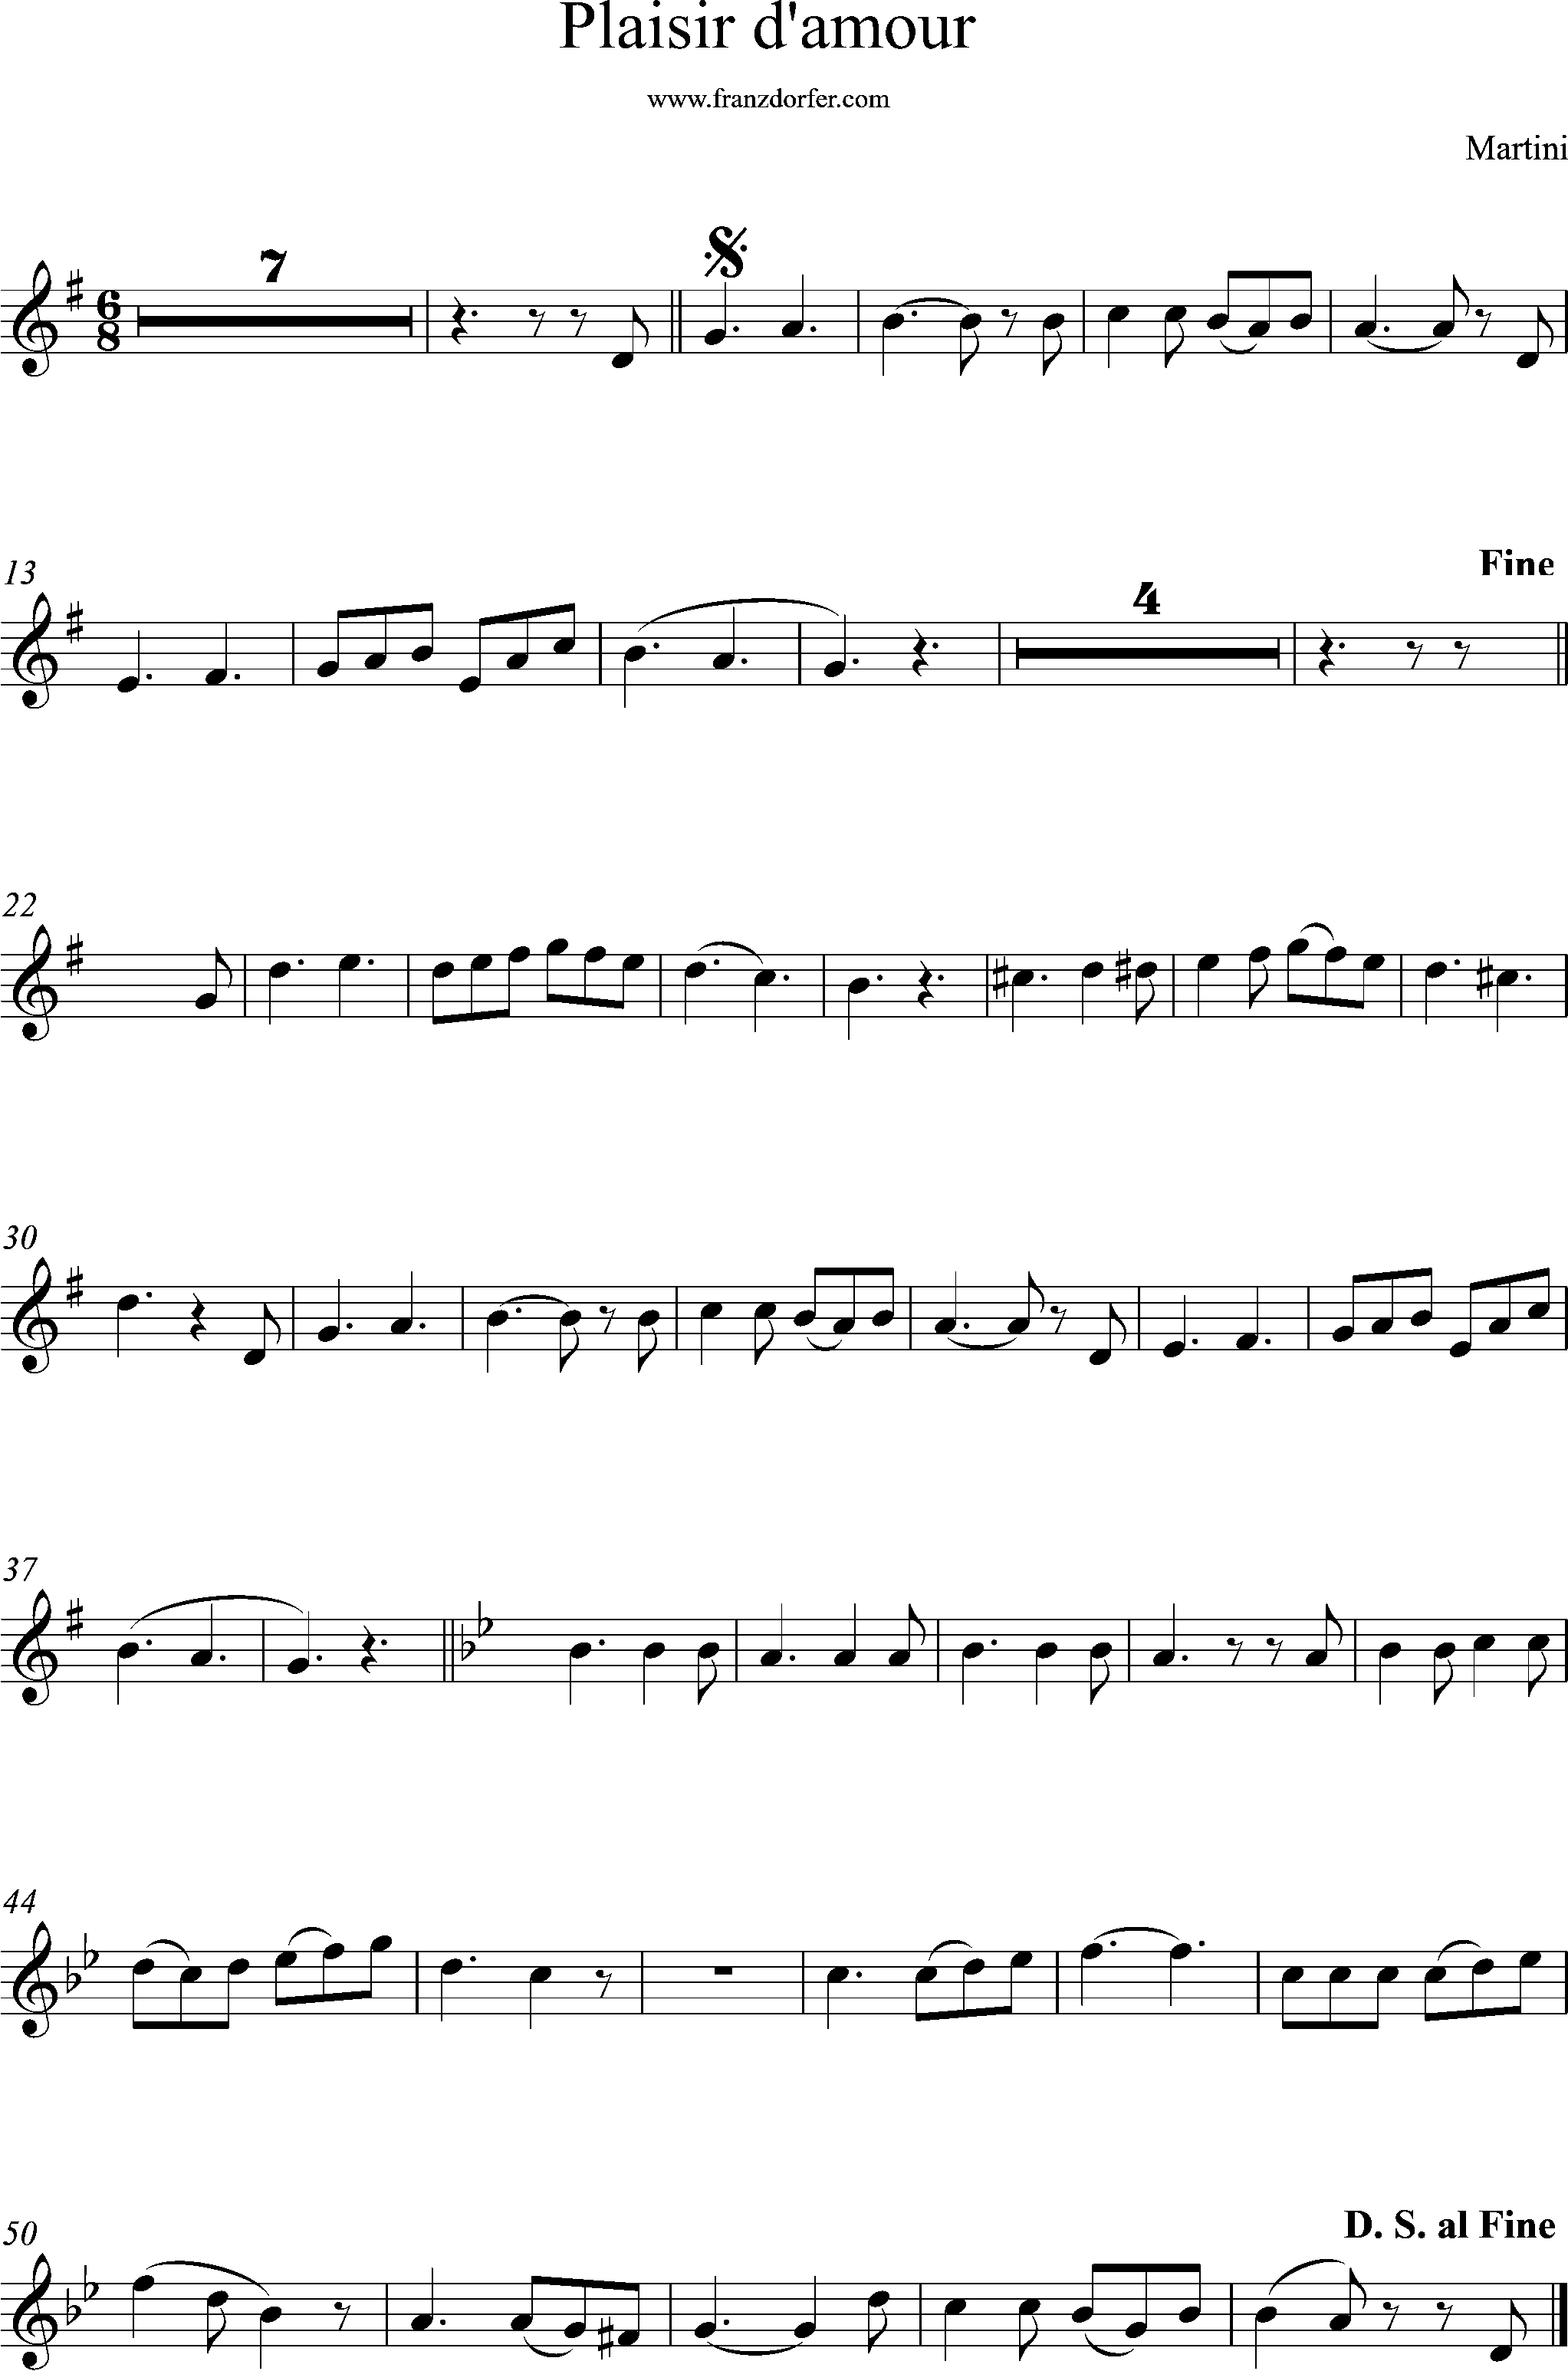 Flute, Querflöte sheetmusic, Plaisir damour, G-Major